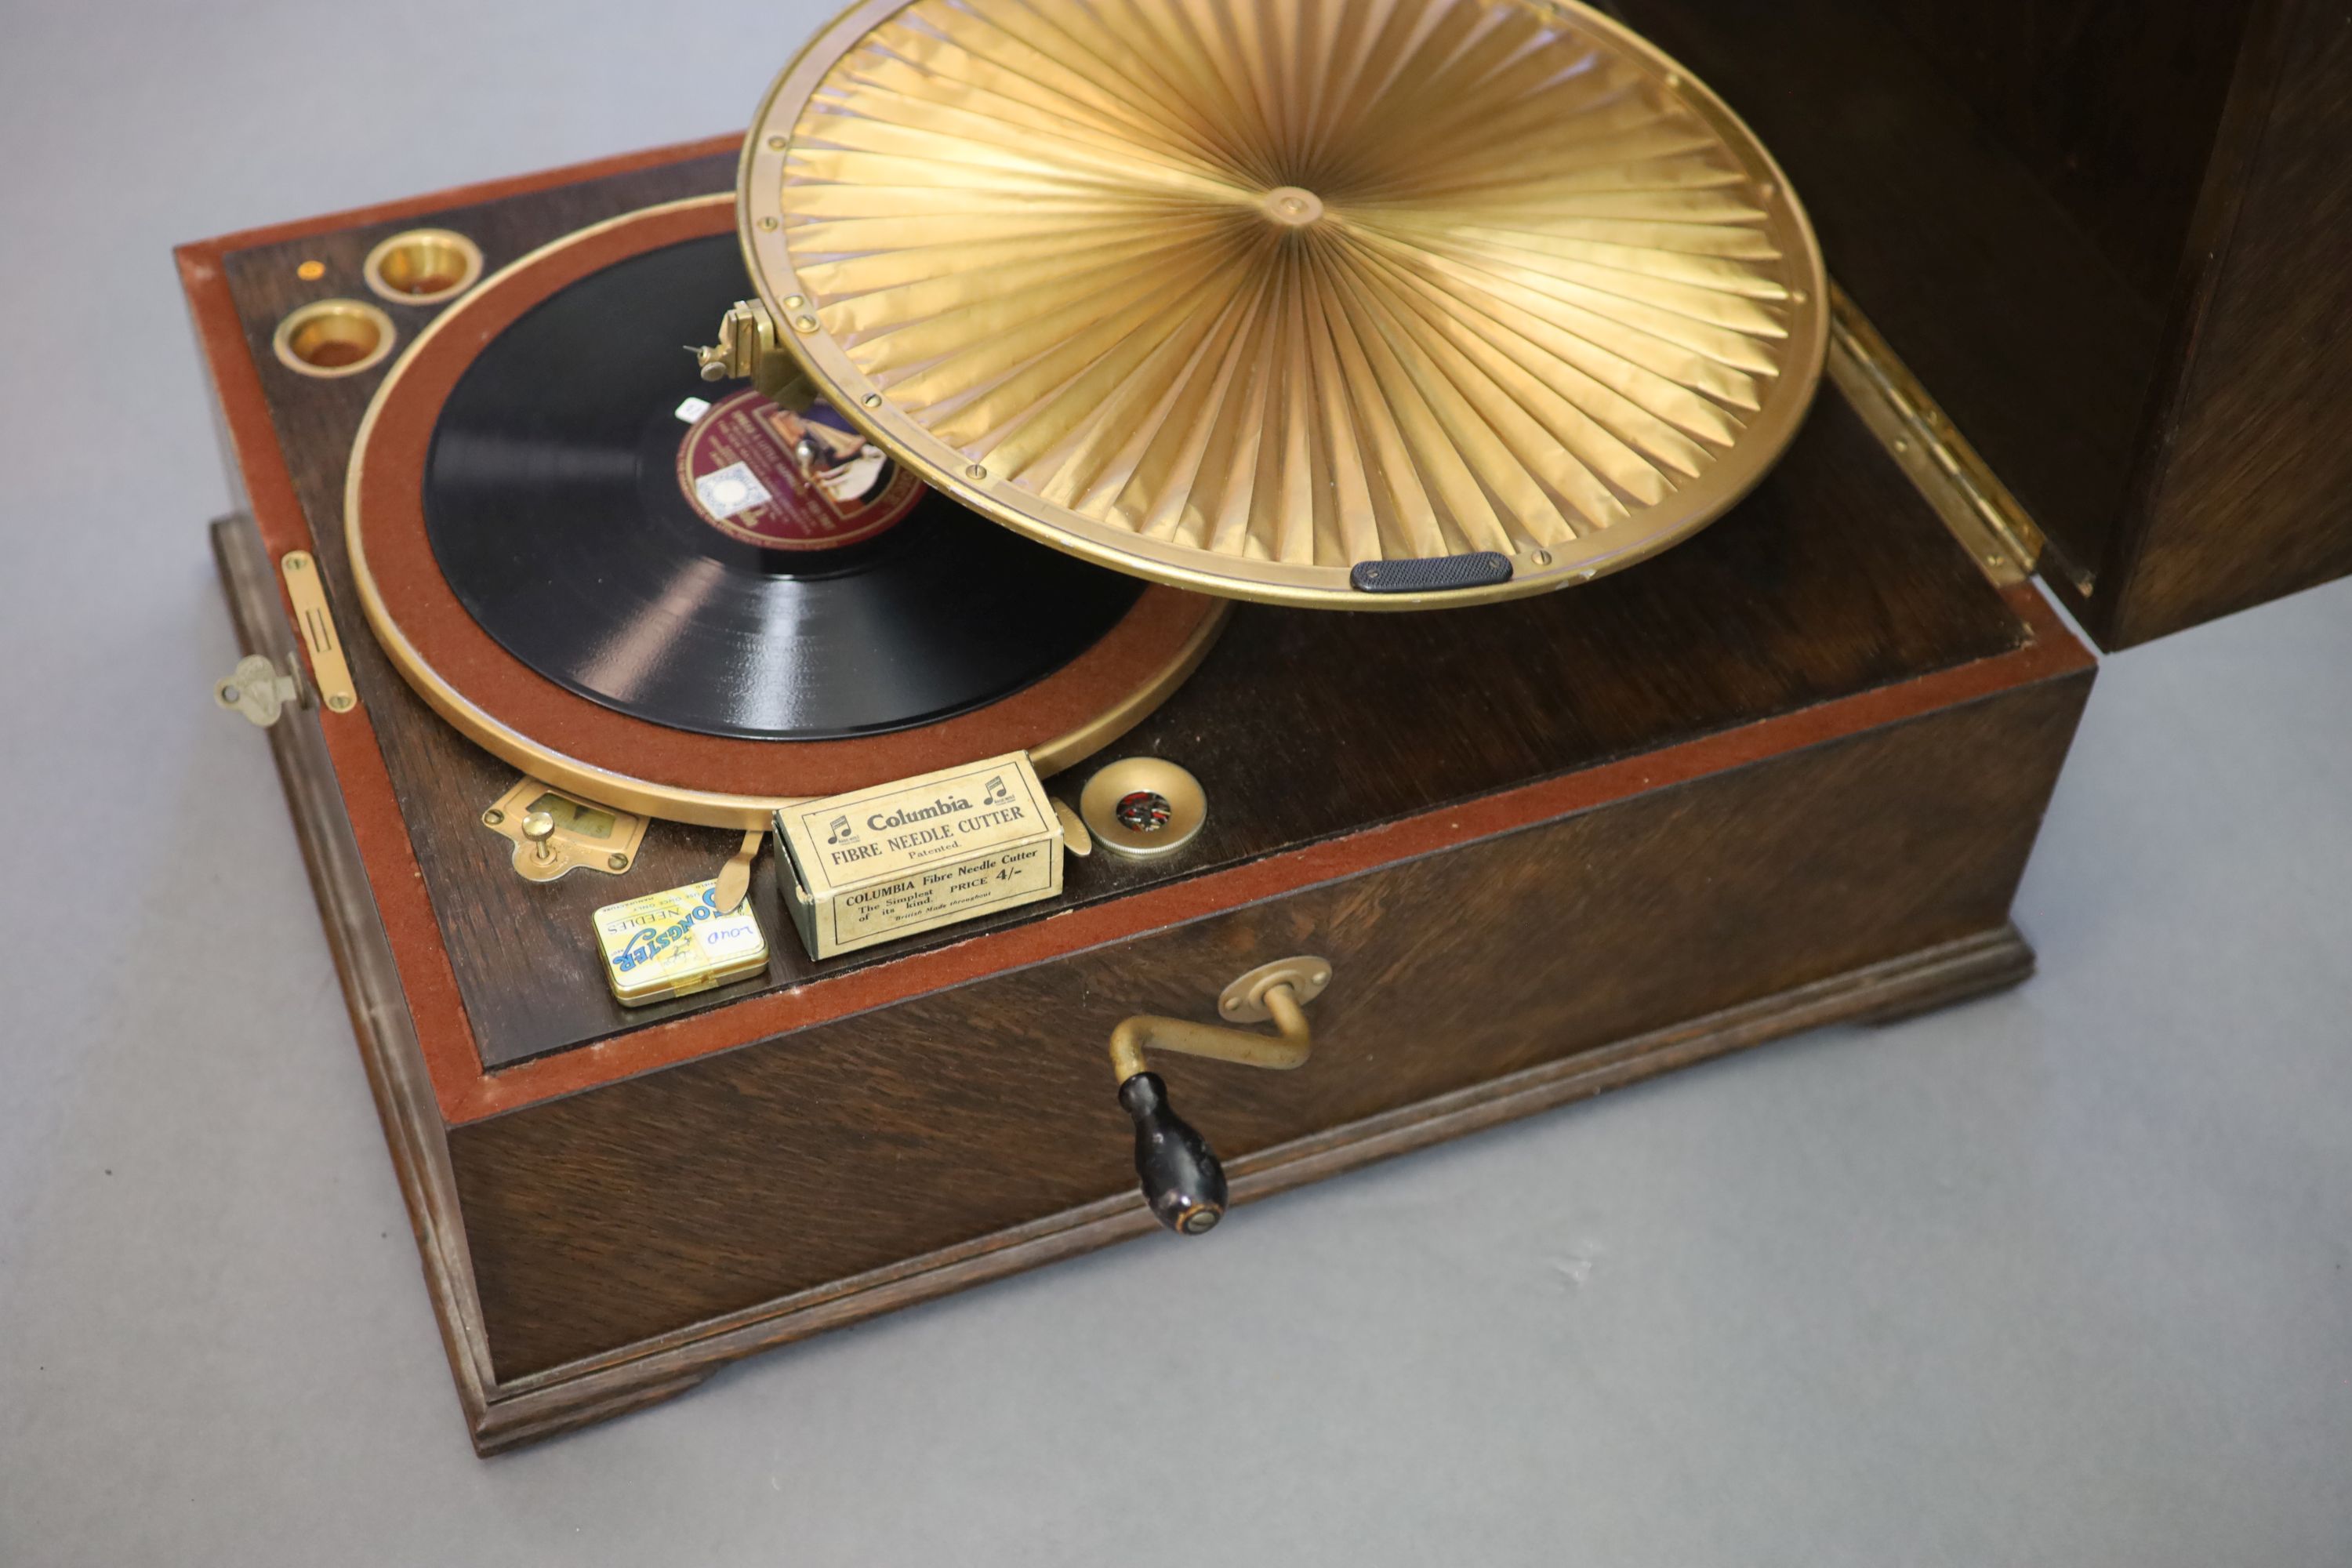 A HMV Lumiere model oak cased 460 gramophone, c1925, closed measurements 42cm wide, 55cm deep, 27cm high.